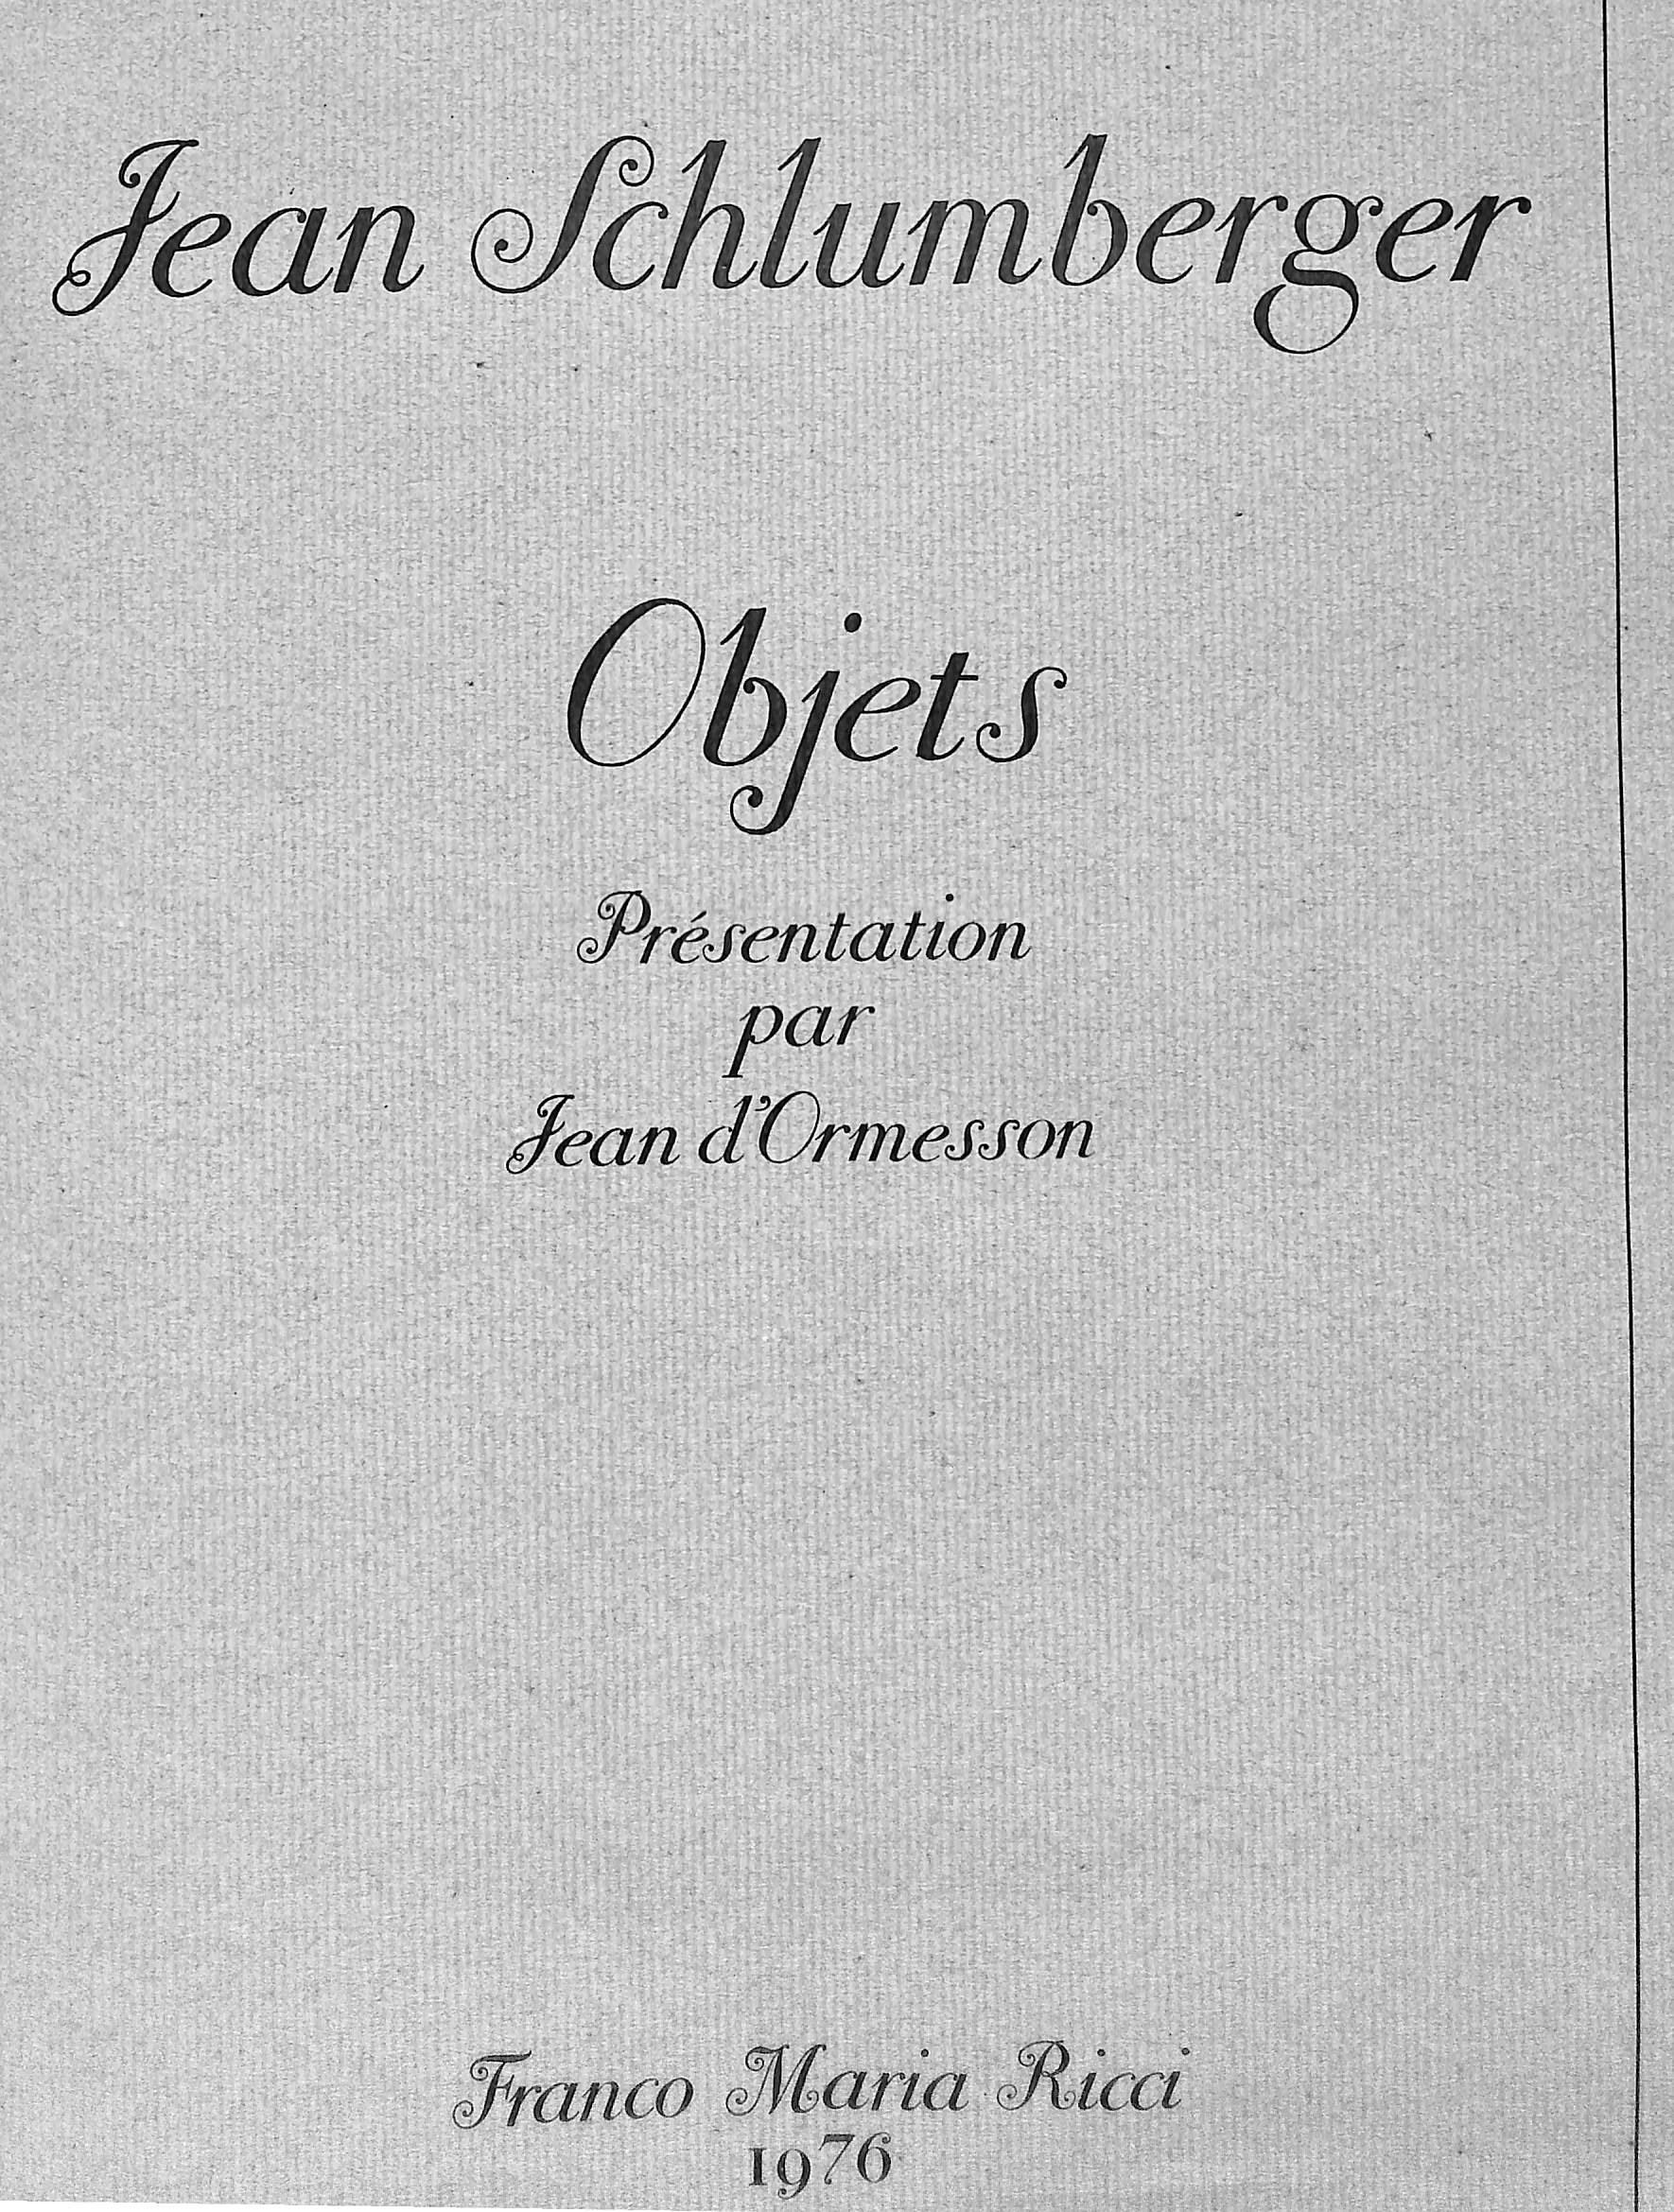 2 volume set w/ silk boards in French/ English text

VREELAND, Diana [Bijoux]

d'ORMESSON, Jean [Objets]

Objets [130] pp.

Bijoux [148] pp.

Franco Maria Ricci [editeur]

1976

13 3/4